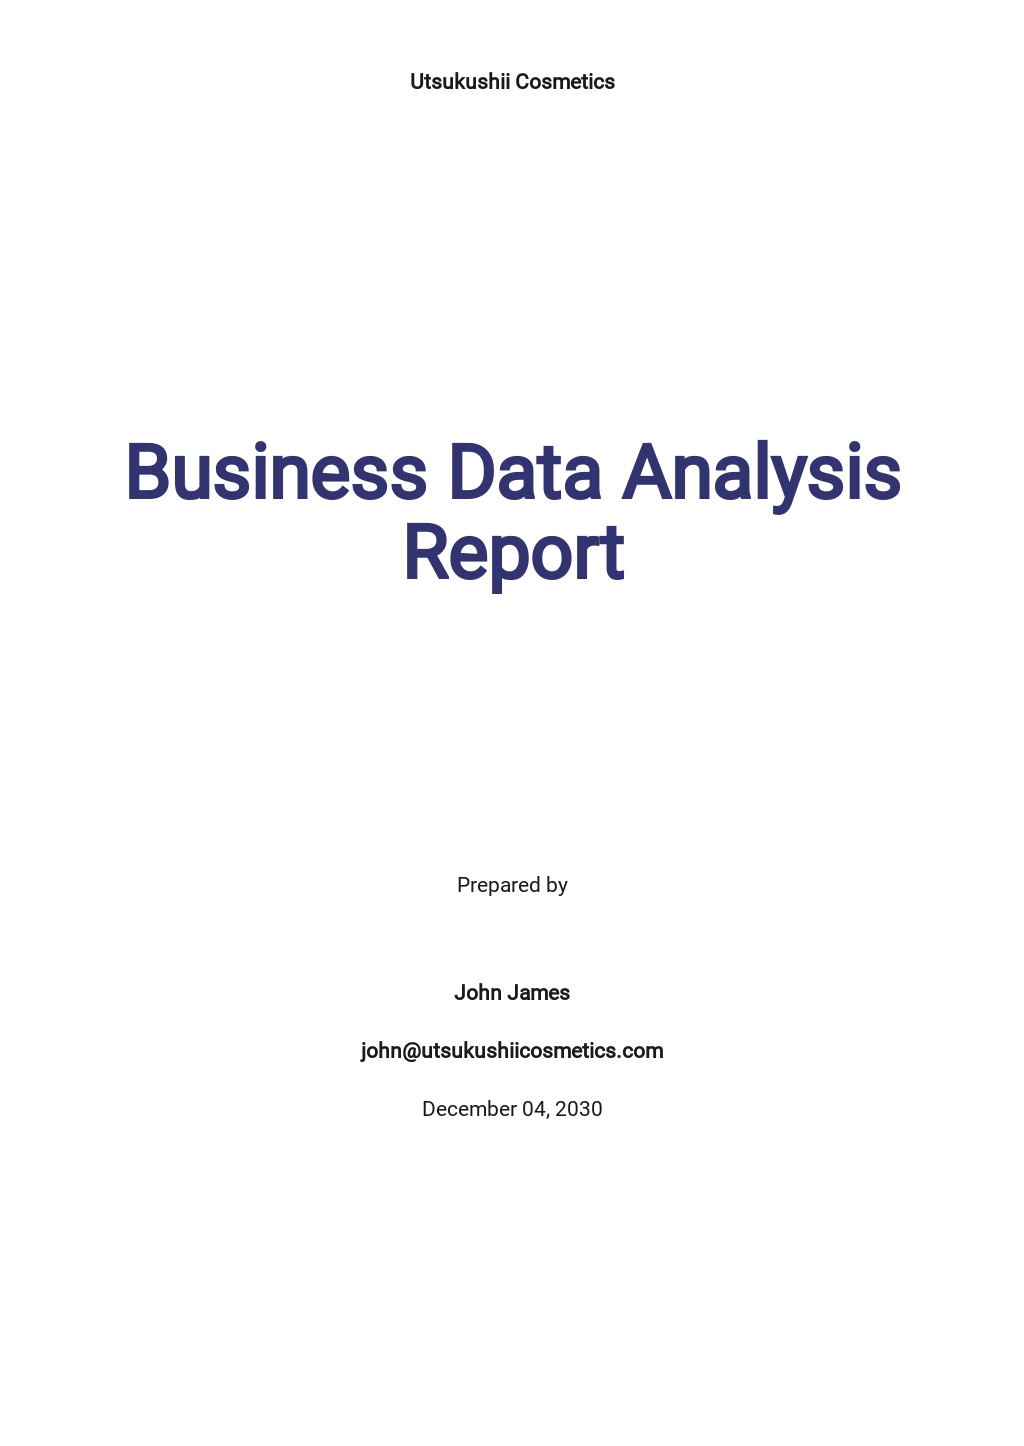 Business Data Analysis Report Template.jpe